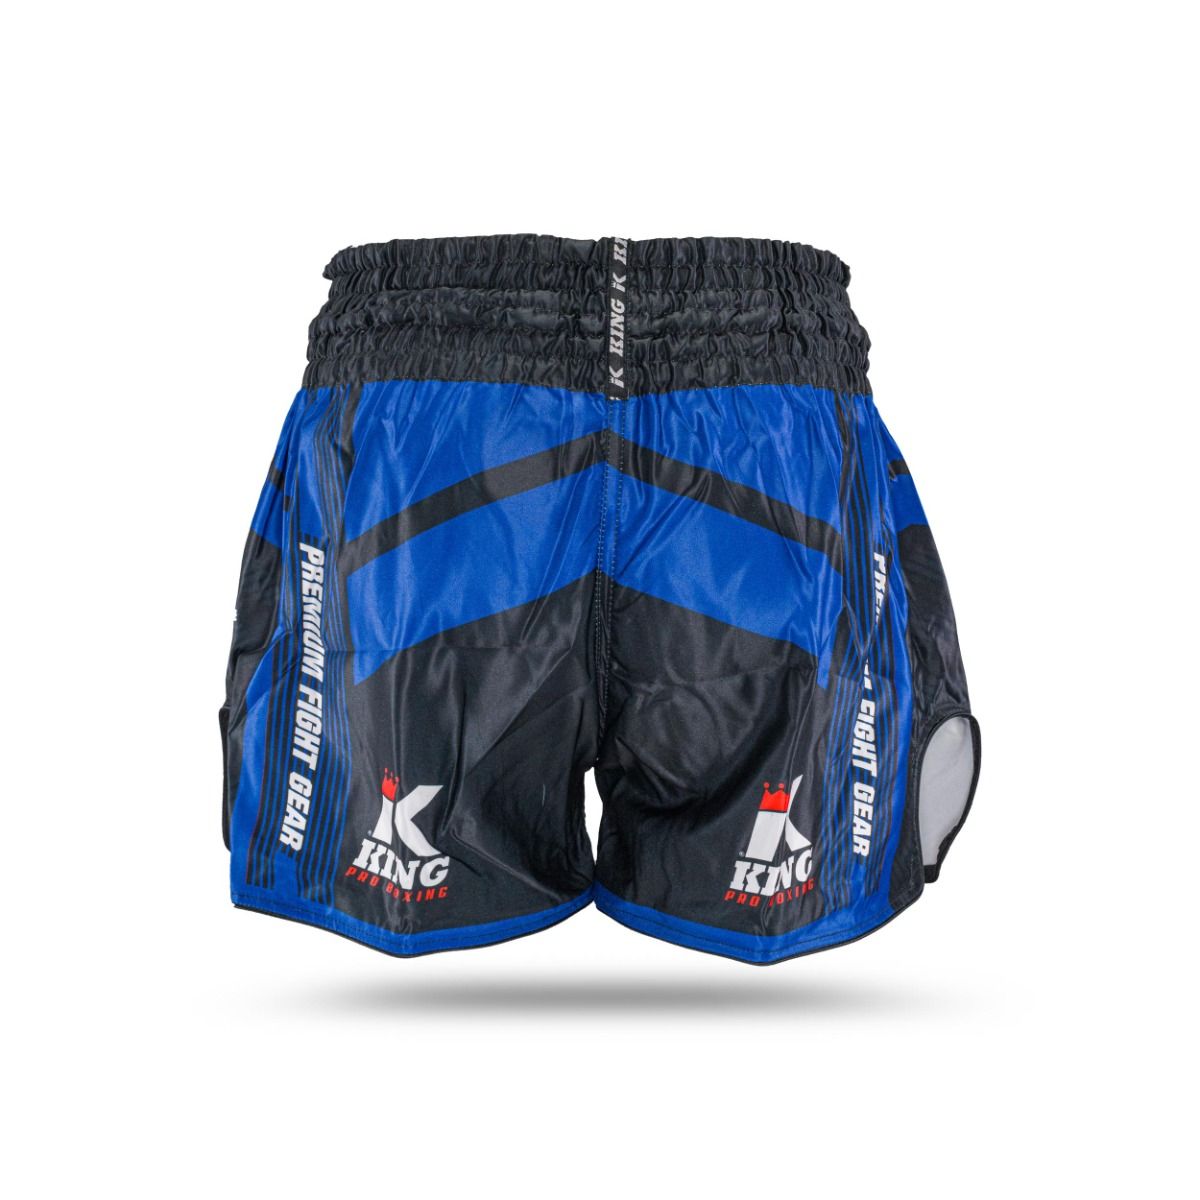 King endurance kick boksbroek blauw - Booster Fight Store